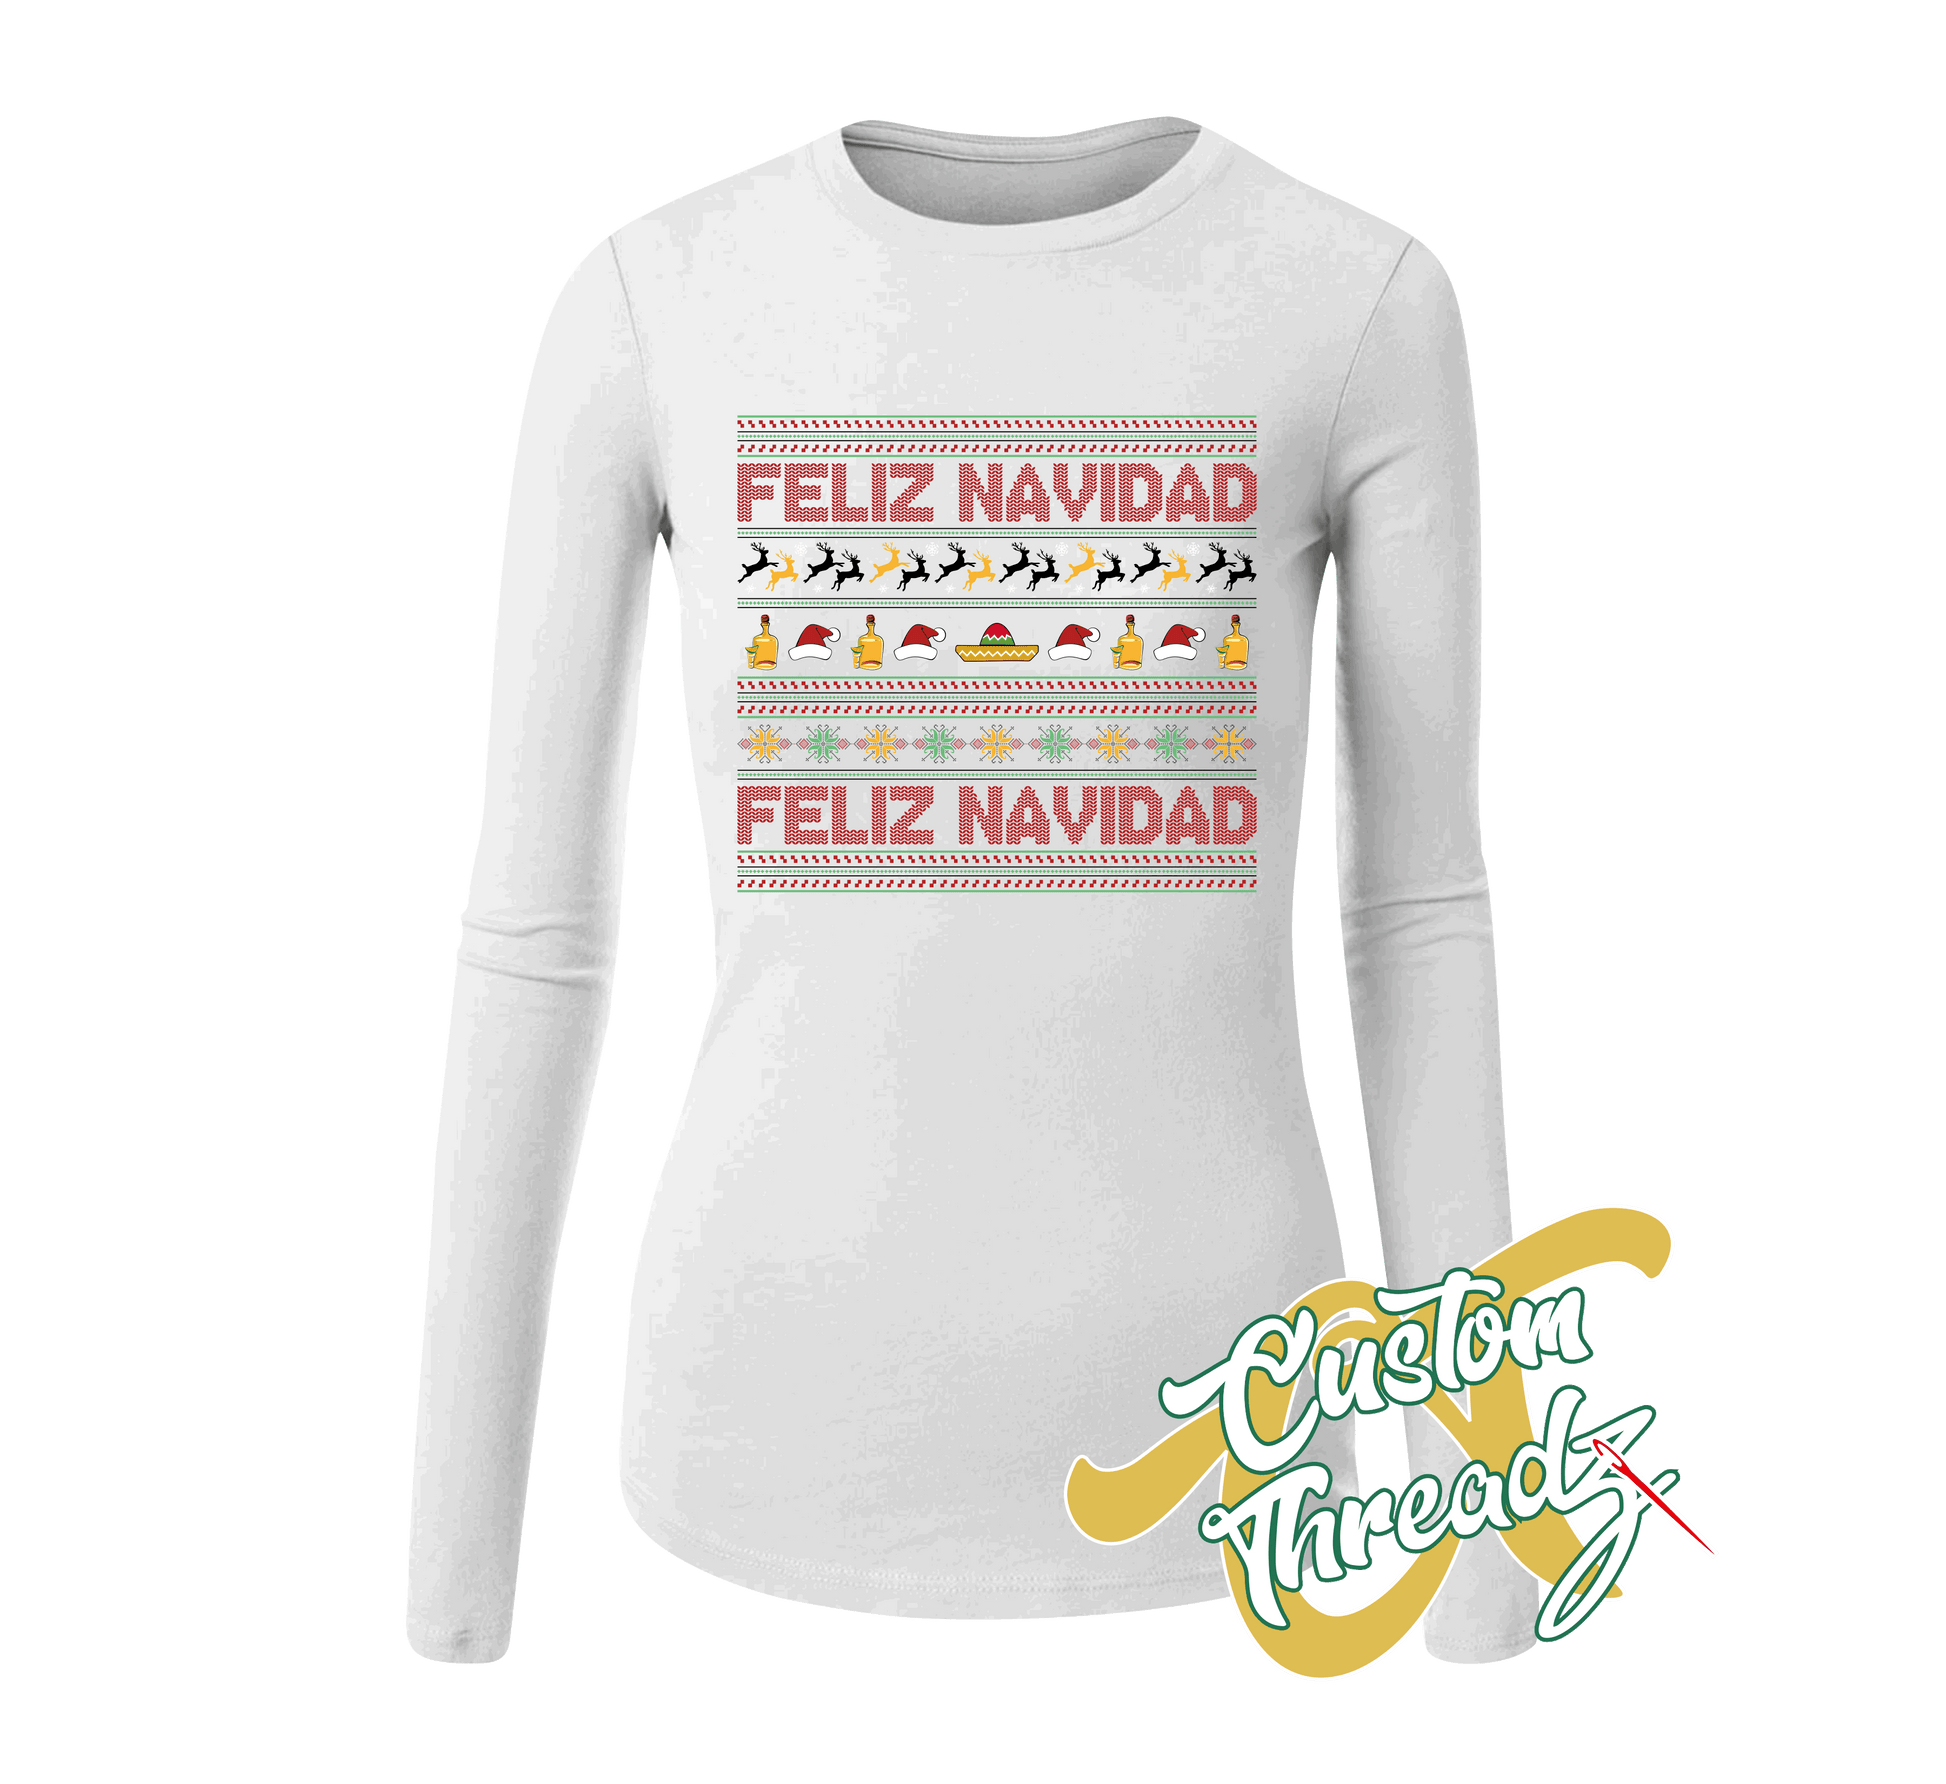 white womens long sleeve tee with feliz navidad christmas sweater style DTG printed design